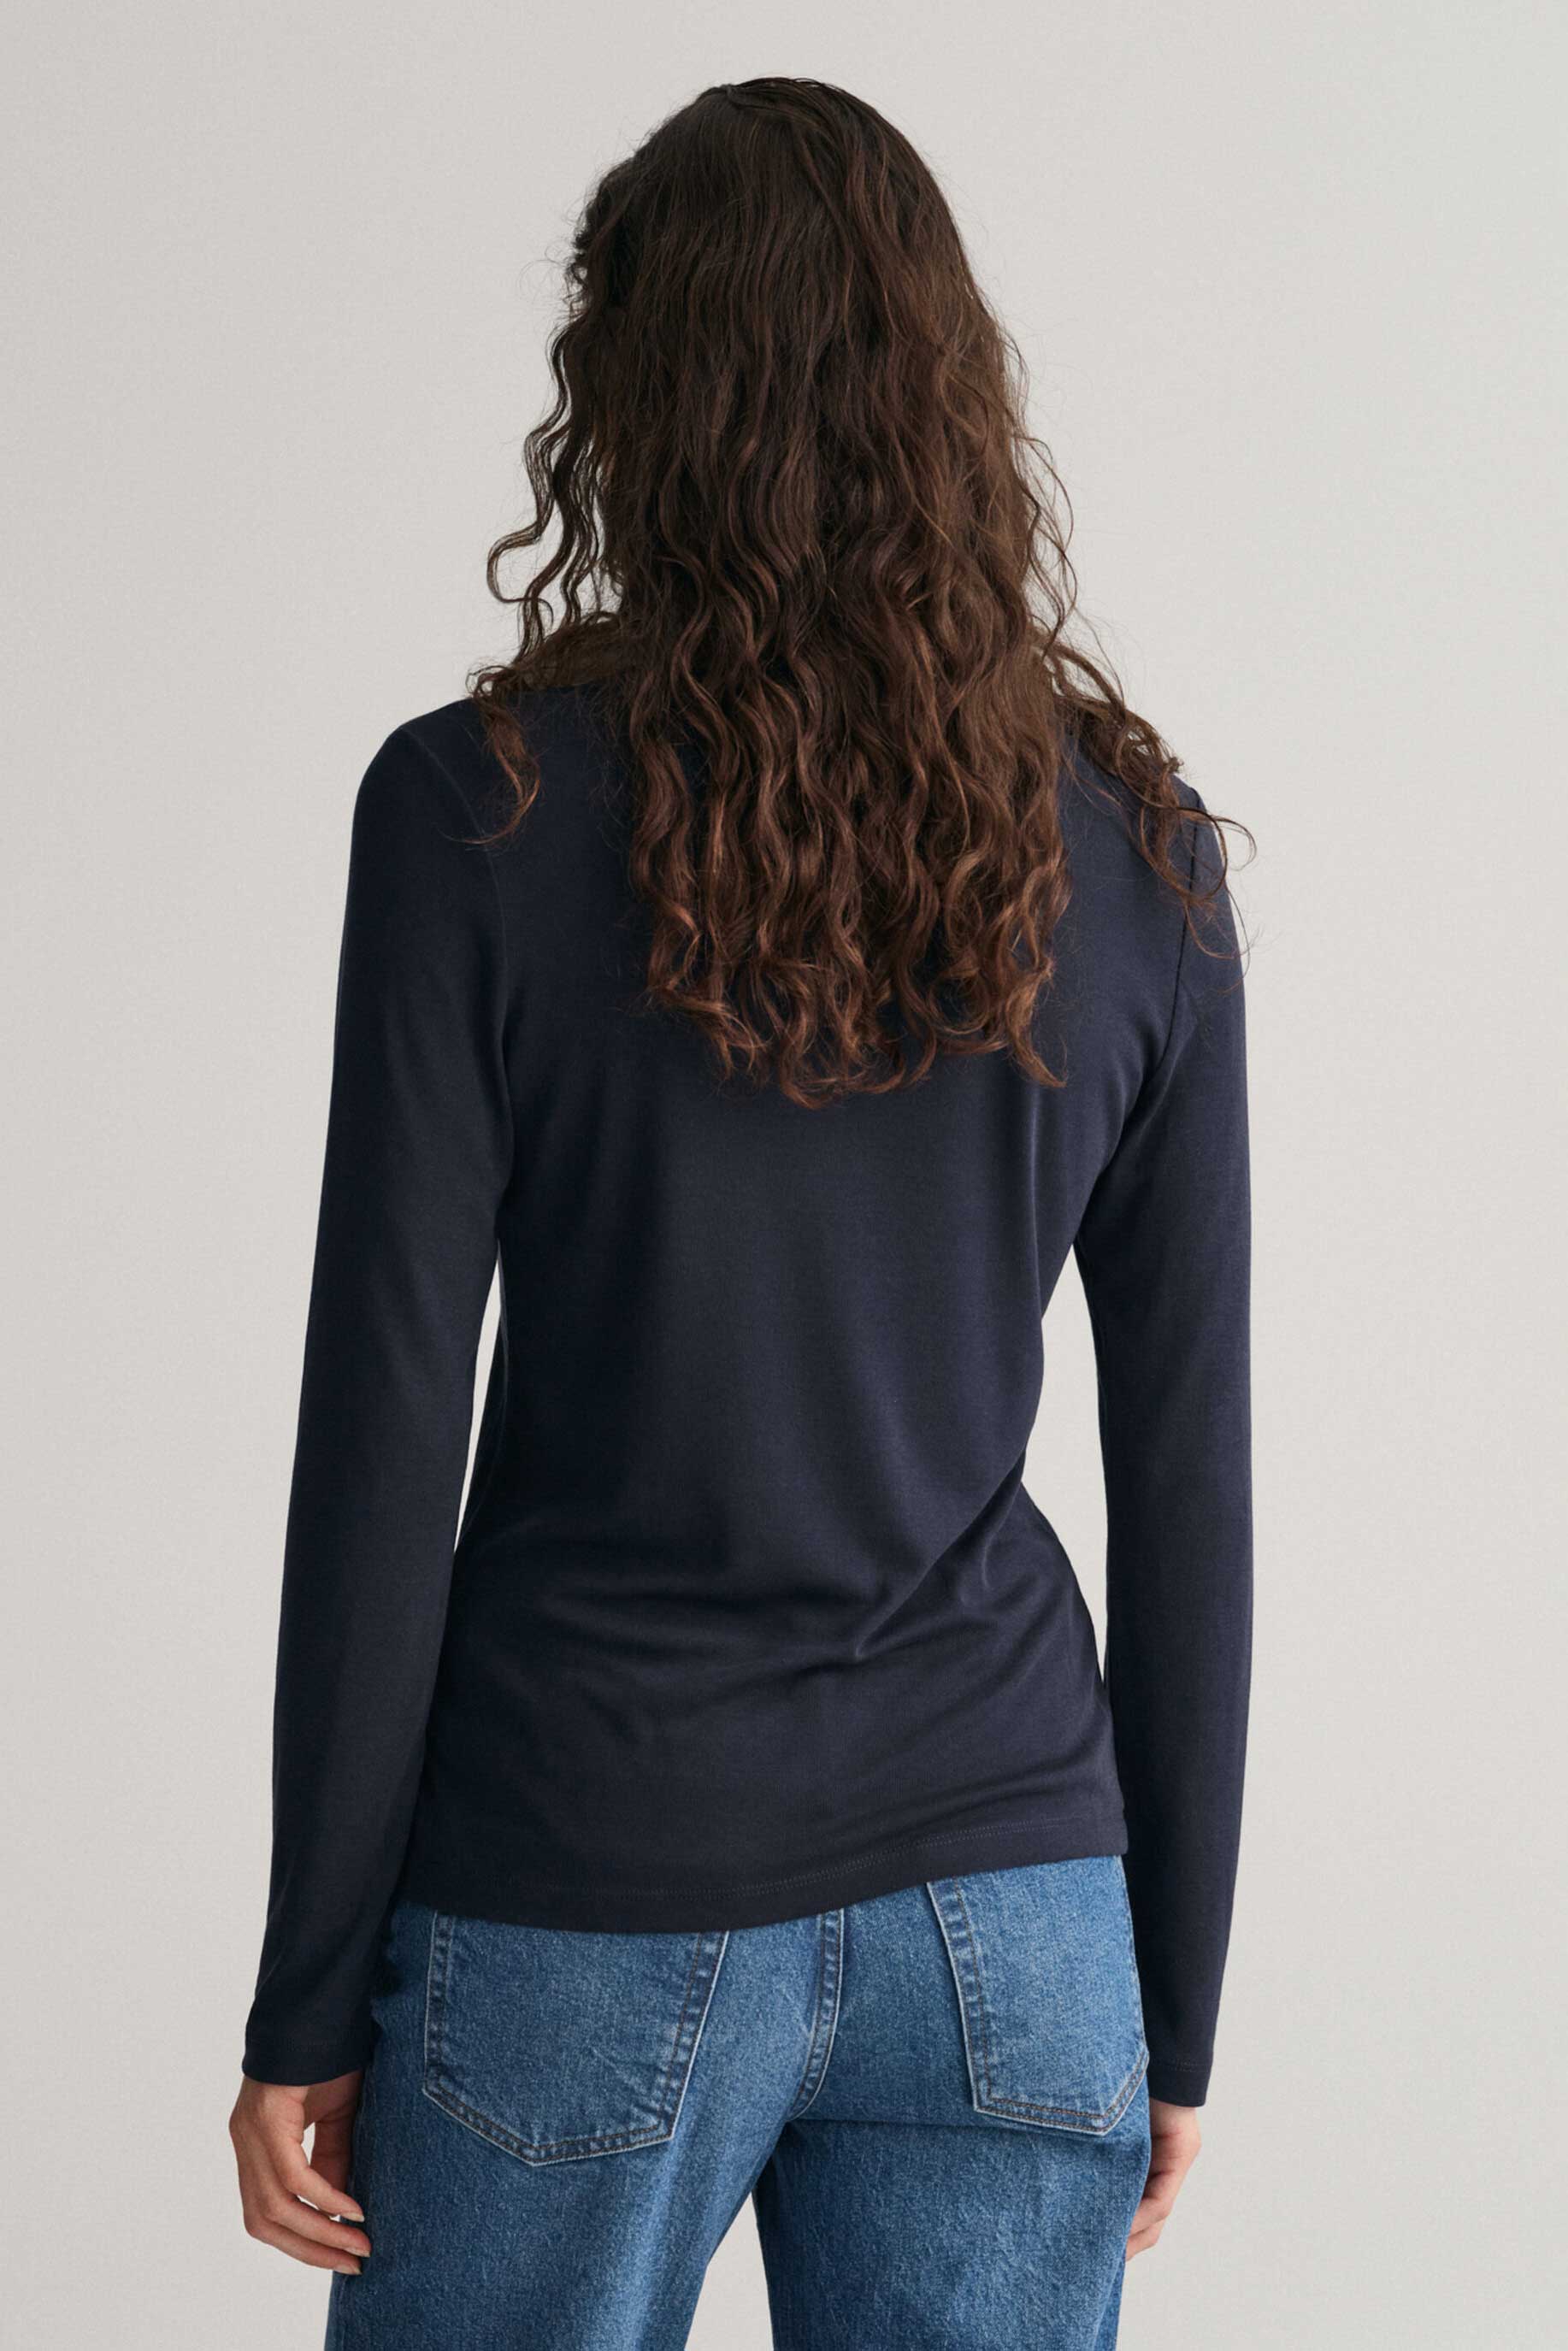 Berydale Women's Long-Sleeve Tee: Elegance in 100% BCI Combed Cotton Women's Tee Shirt Image 